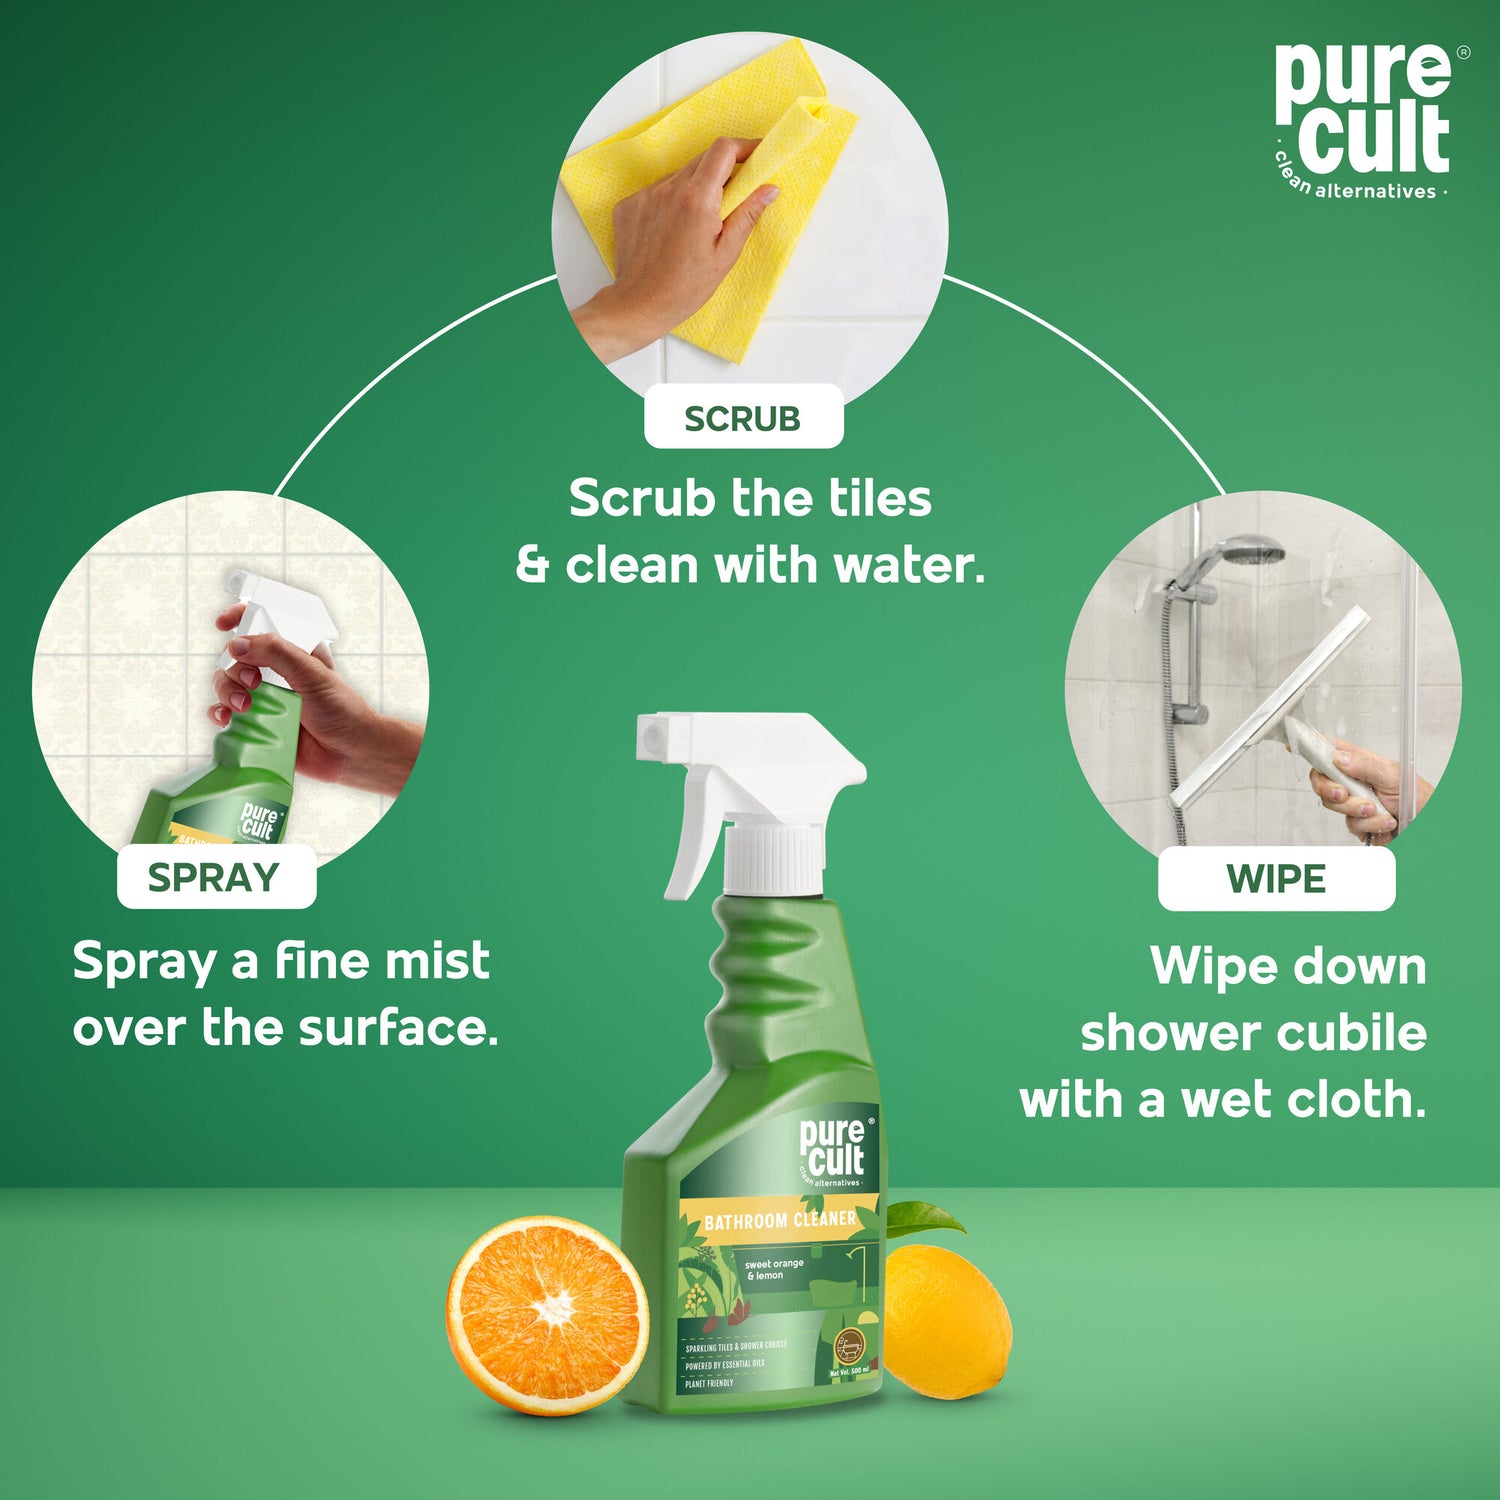 Bathroom Cleaner With Sweet Orange &amp; Lemon Essential Oil – 500ml